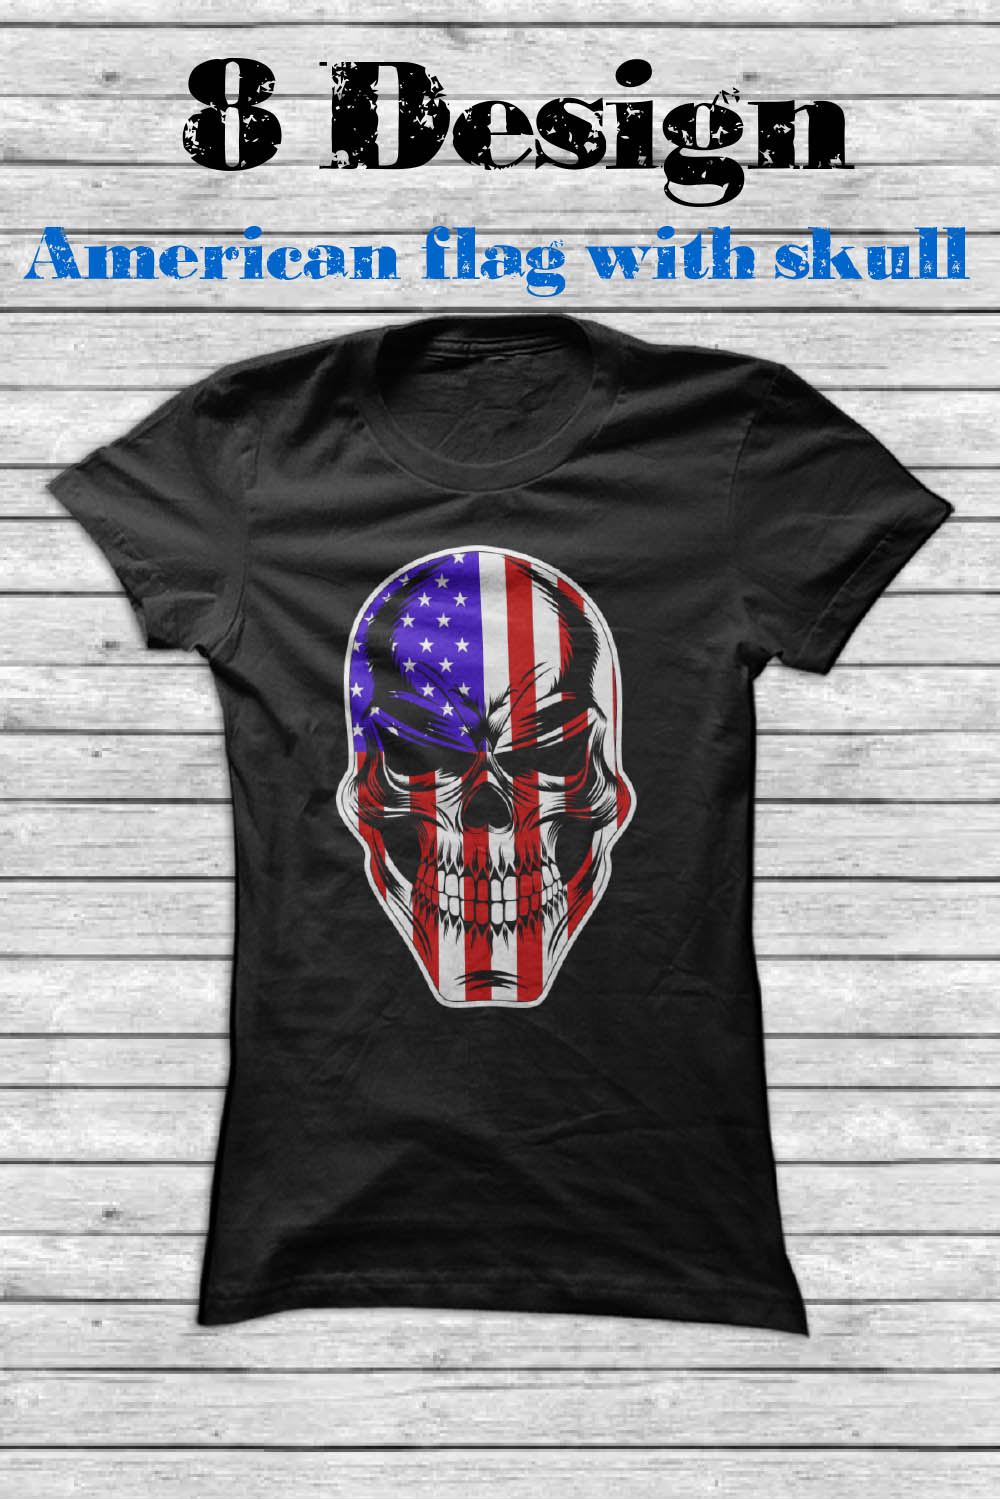 American Flag with Skull T-shirt Design pinterest image.